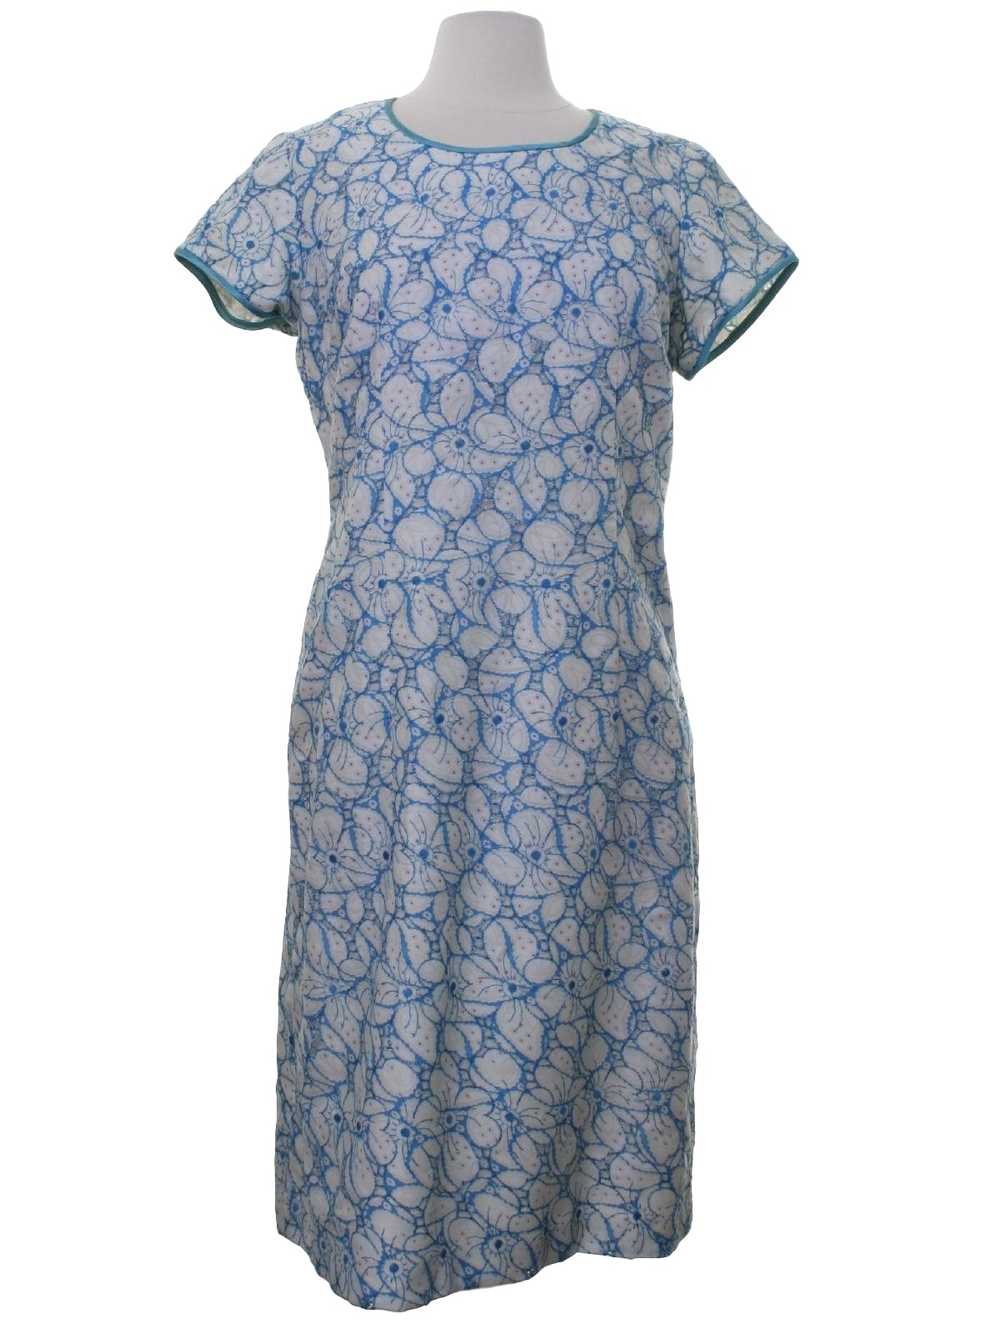 1960's Renmor Mod Dress - image 1